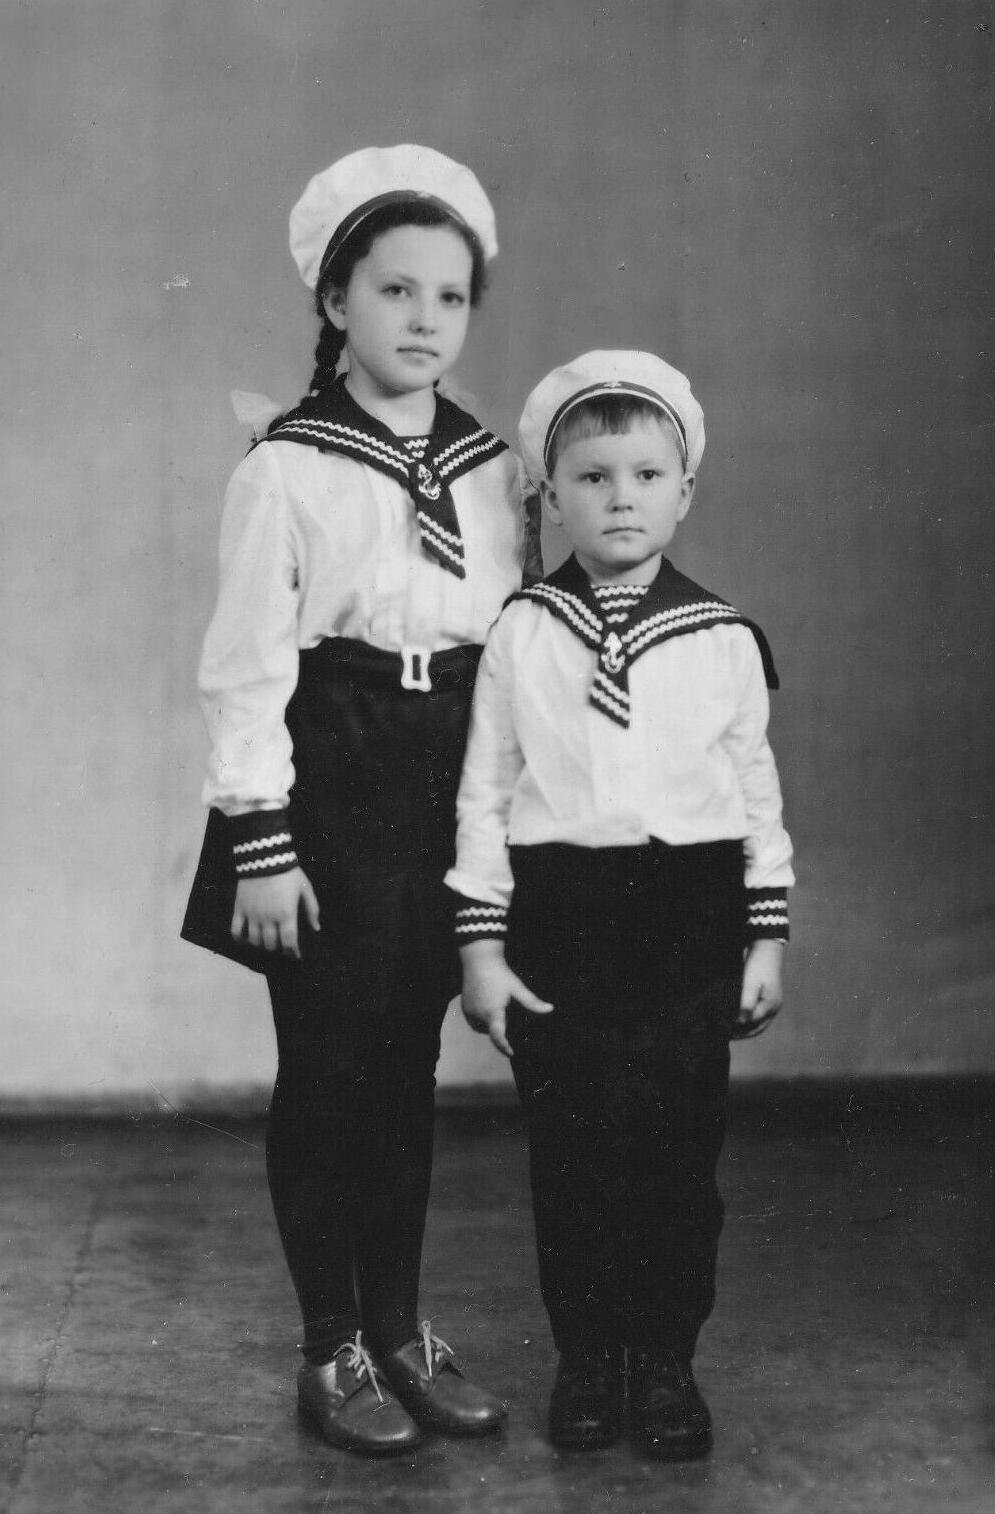 Russian sailor suits